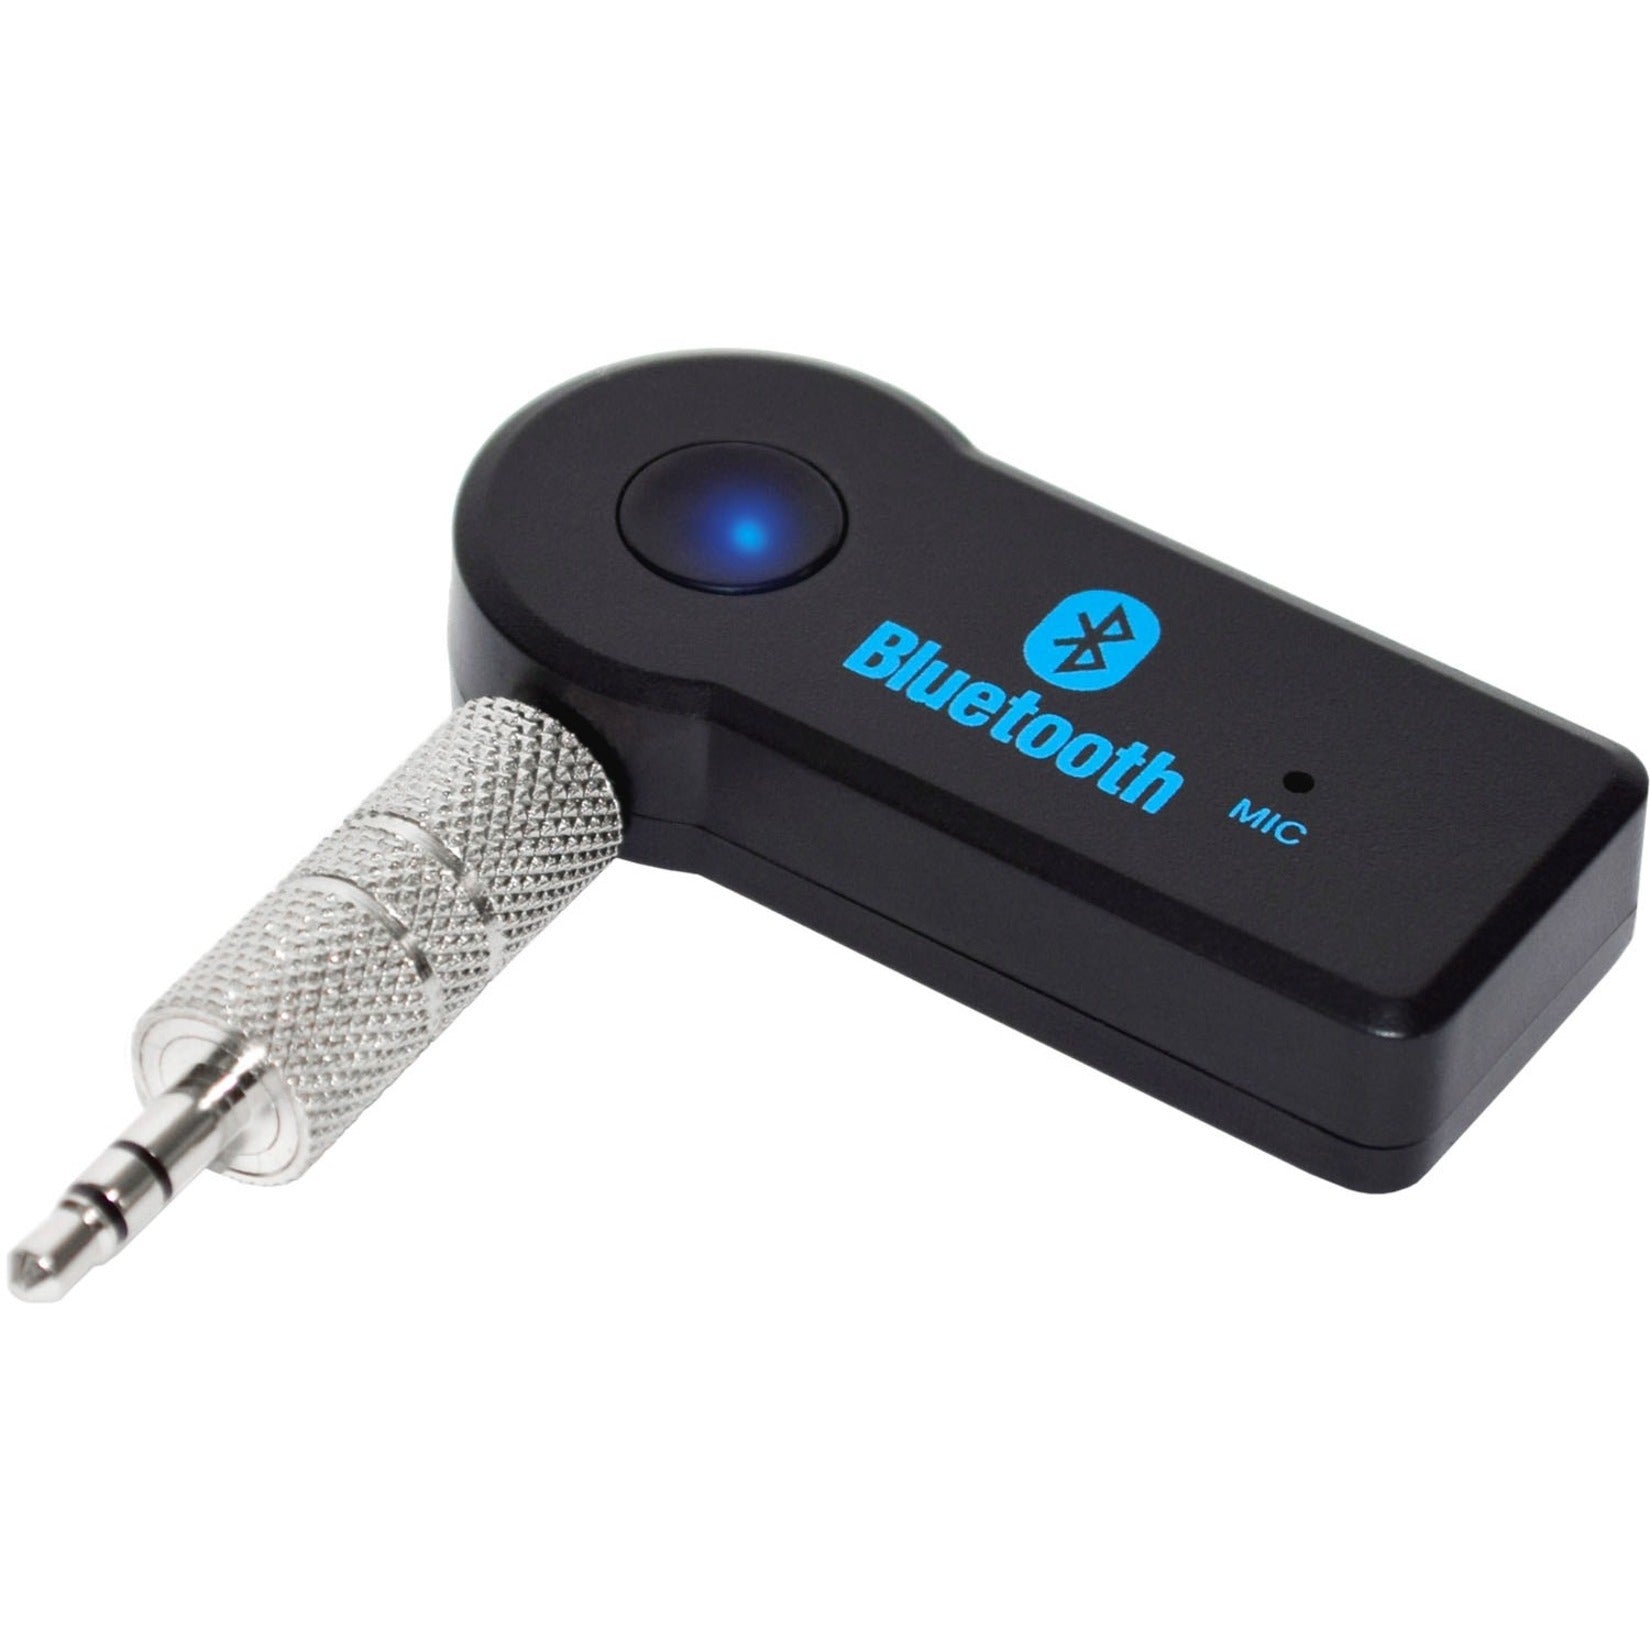 Premiertek BT-3035 Wireless Bluetooth 3.5mm AUX Audio Stereo Music Home Car Receiver Adapter w/Mic, 1 Year Limited Warranty